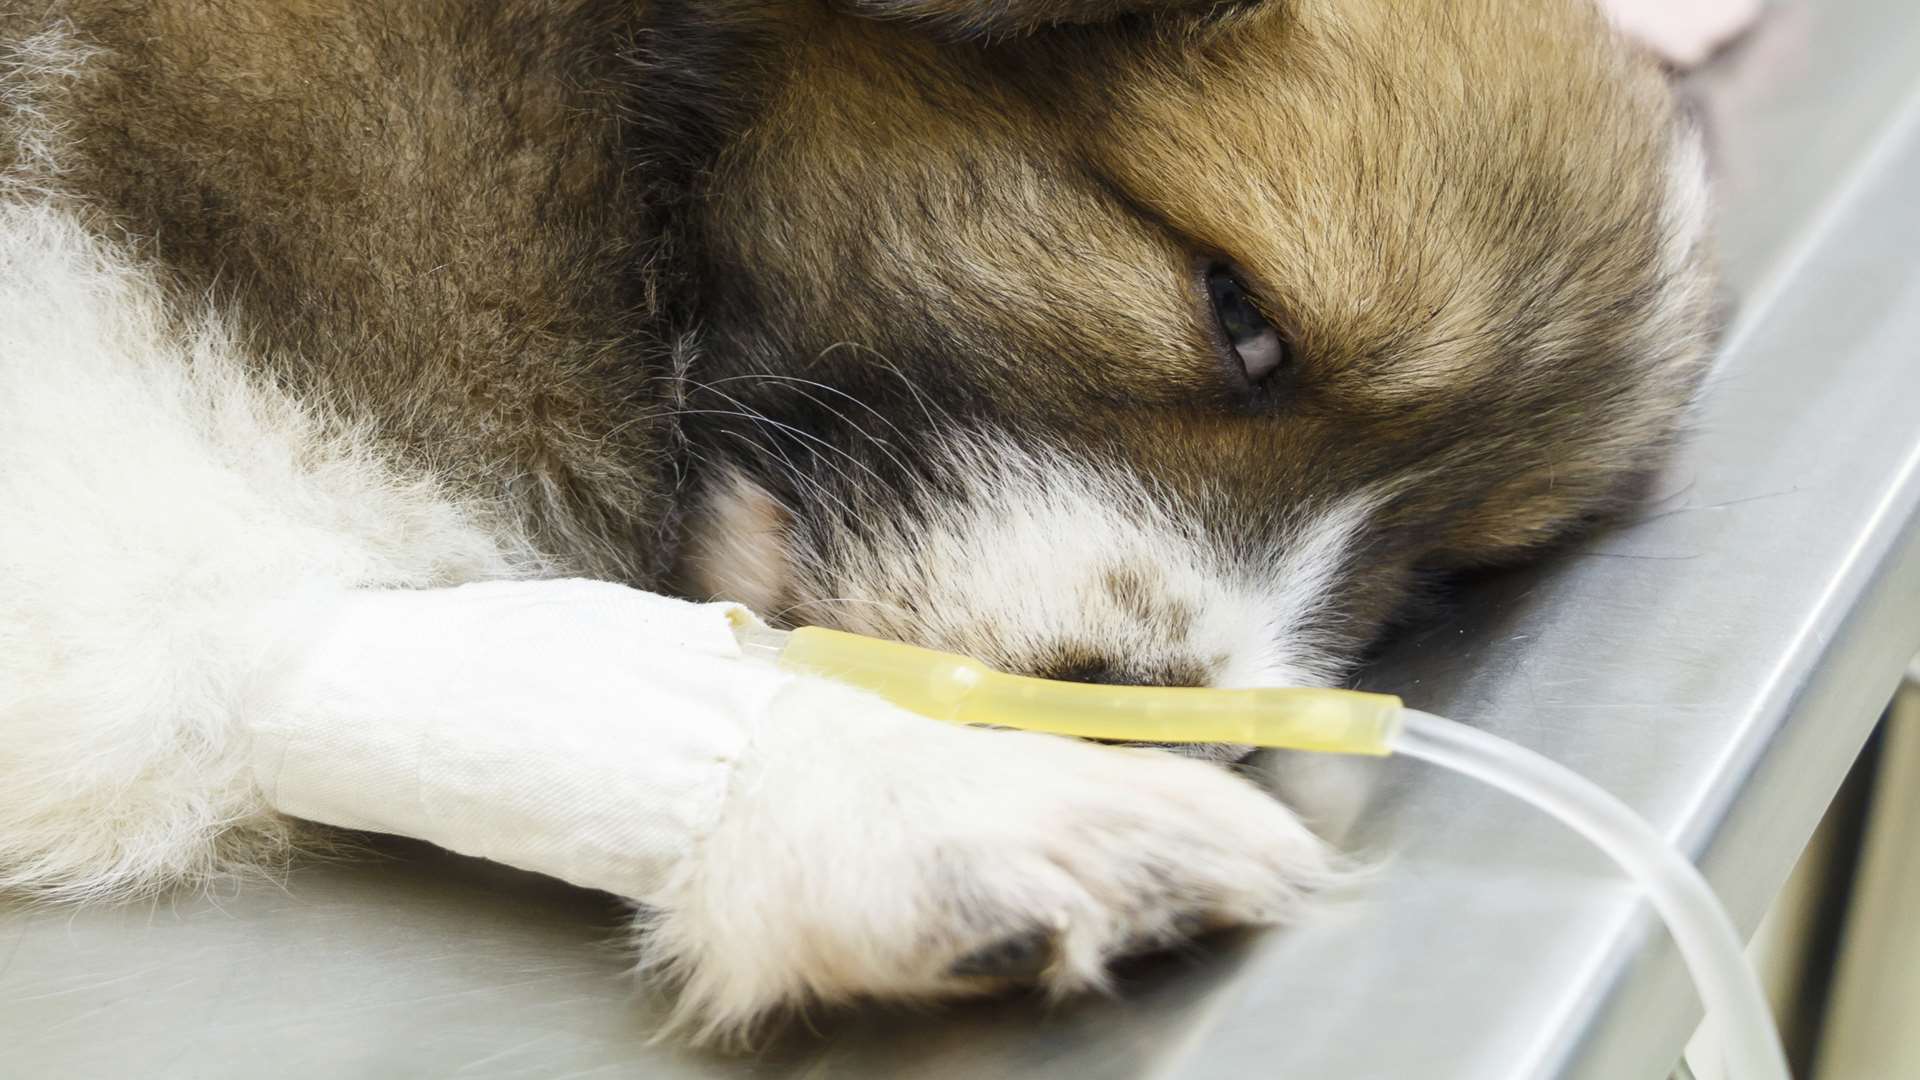 A dog on an intravenous drip